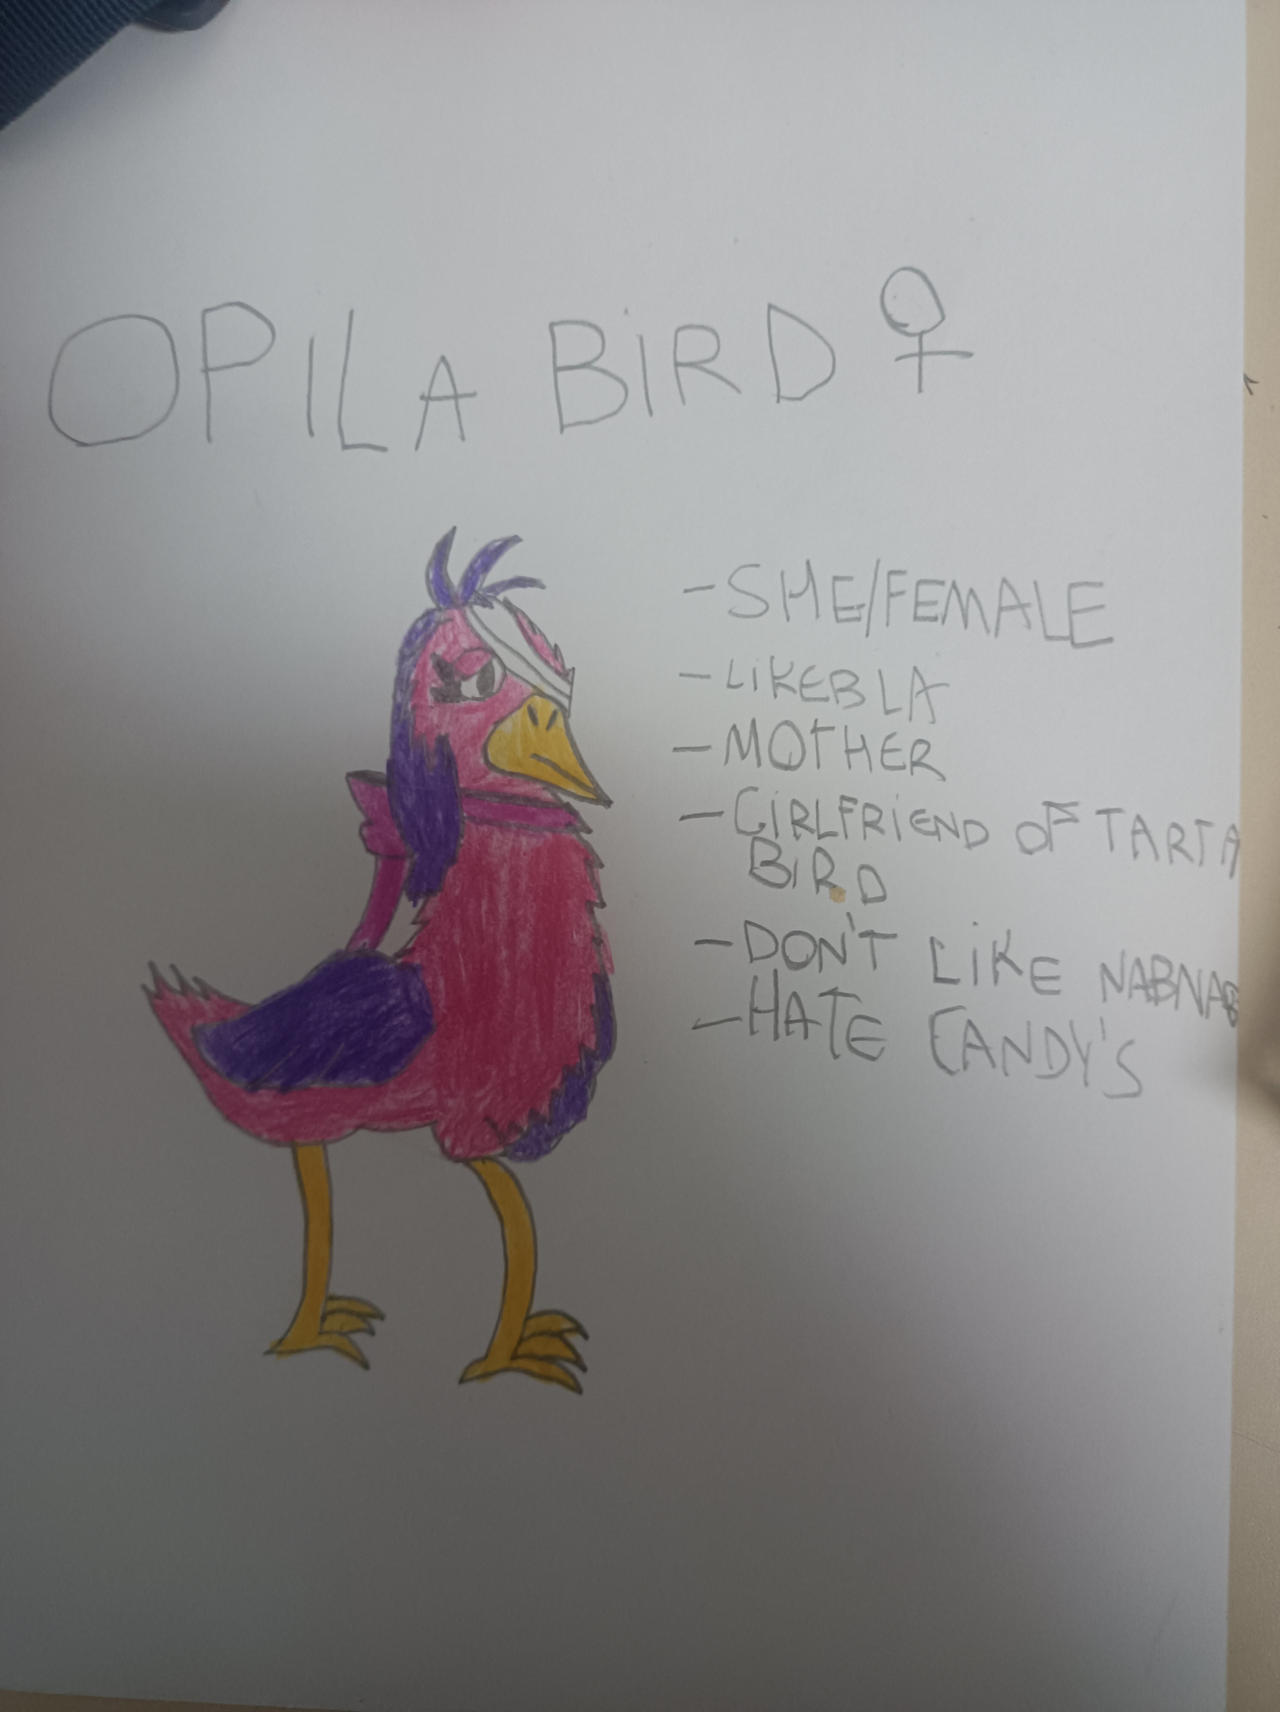 Opila Bird by SyahrulRamadhank02 on DeviantArt